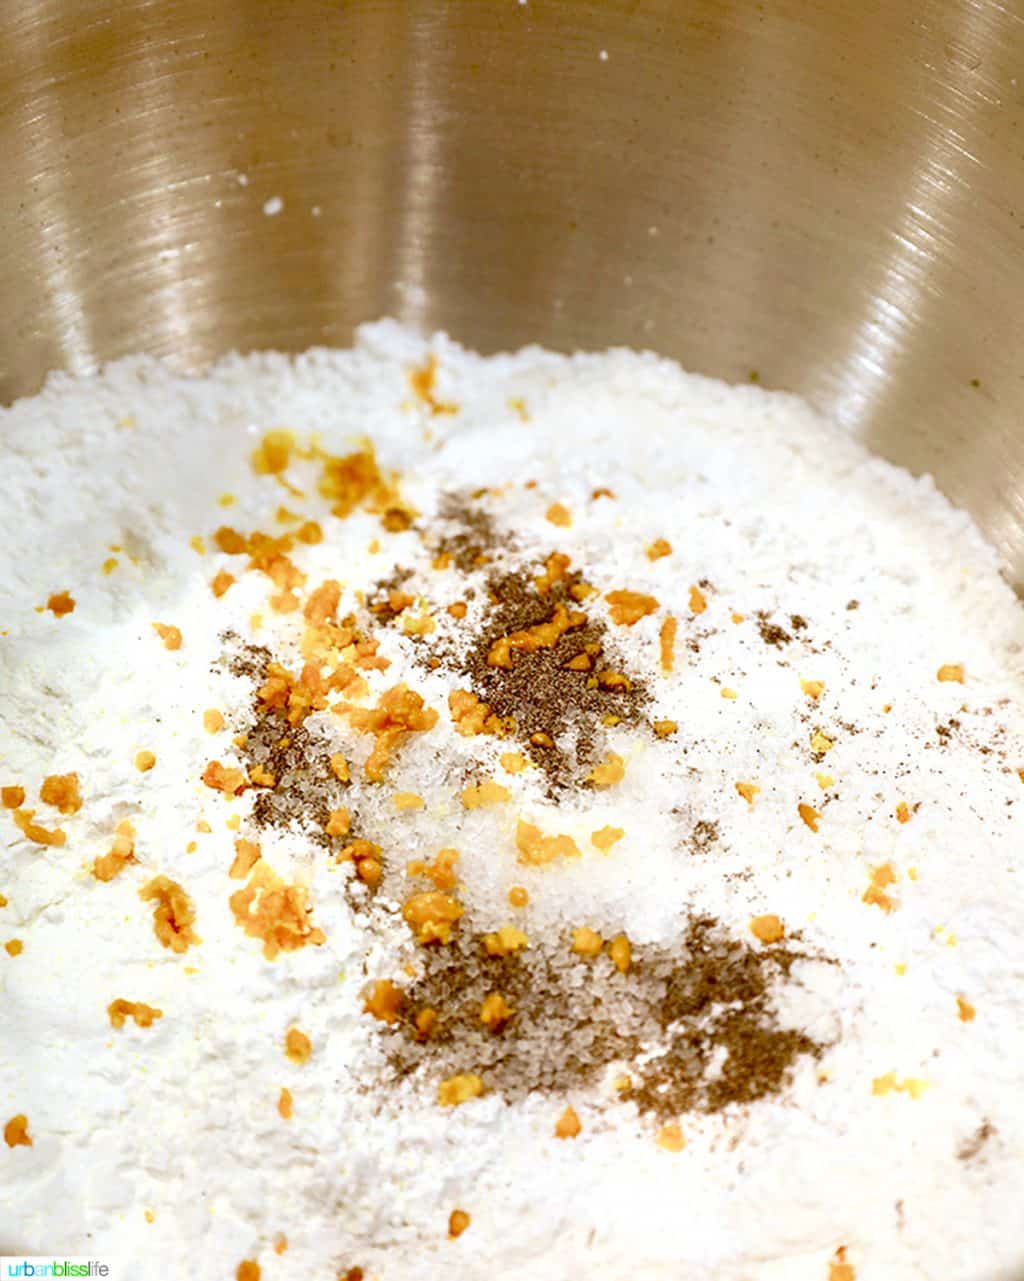 dry ingredients, orange zest, cardamom to make cinnamon rolls